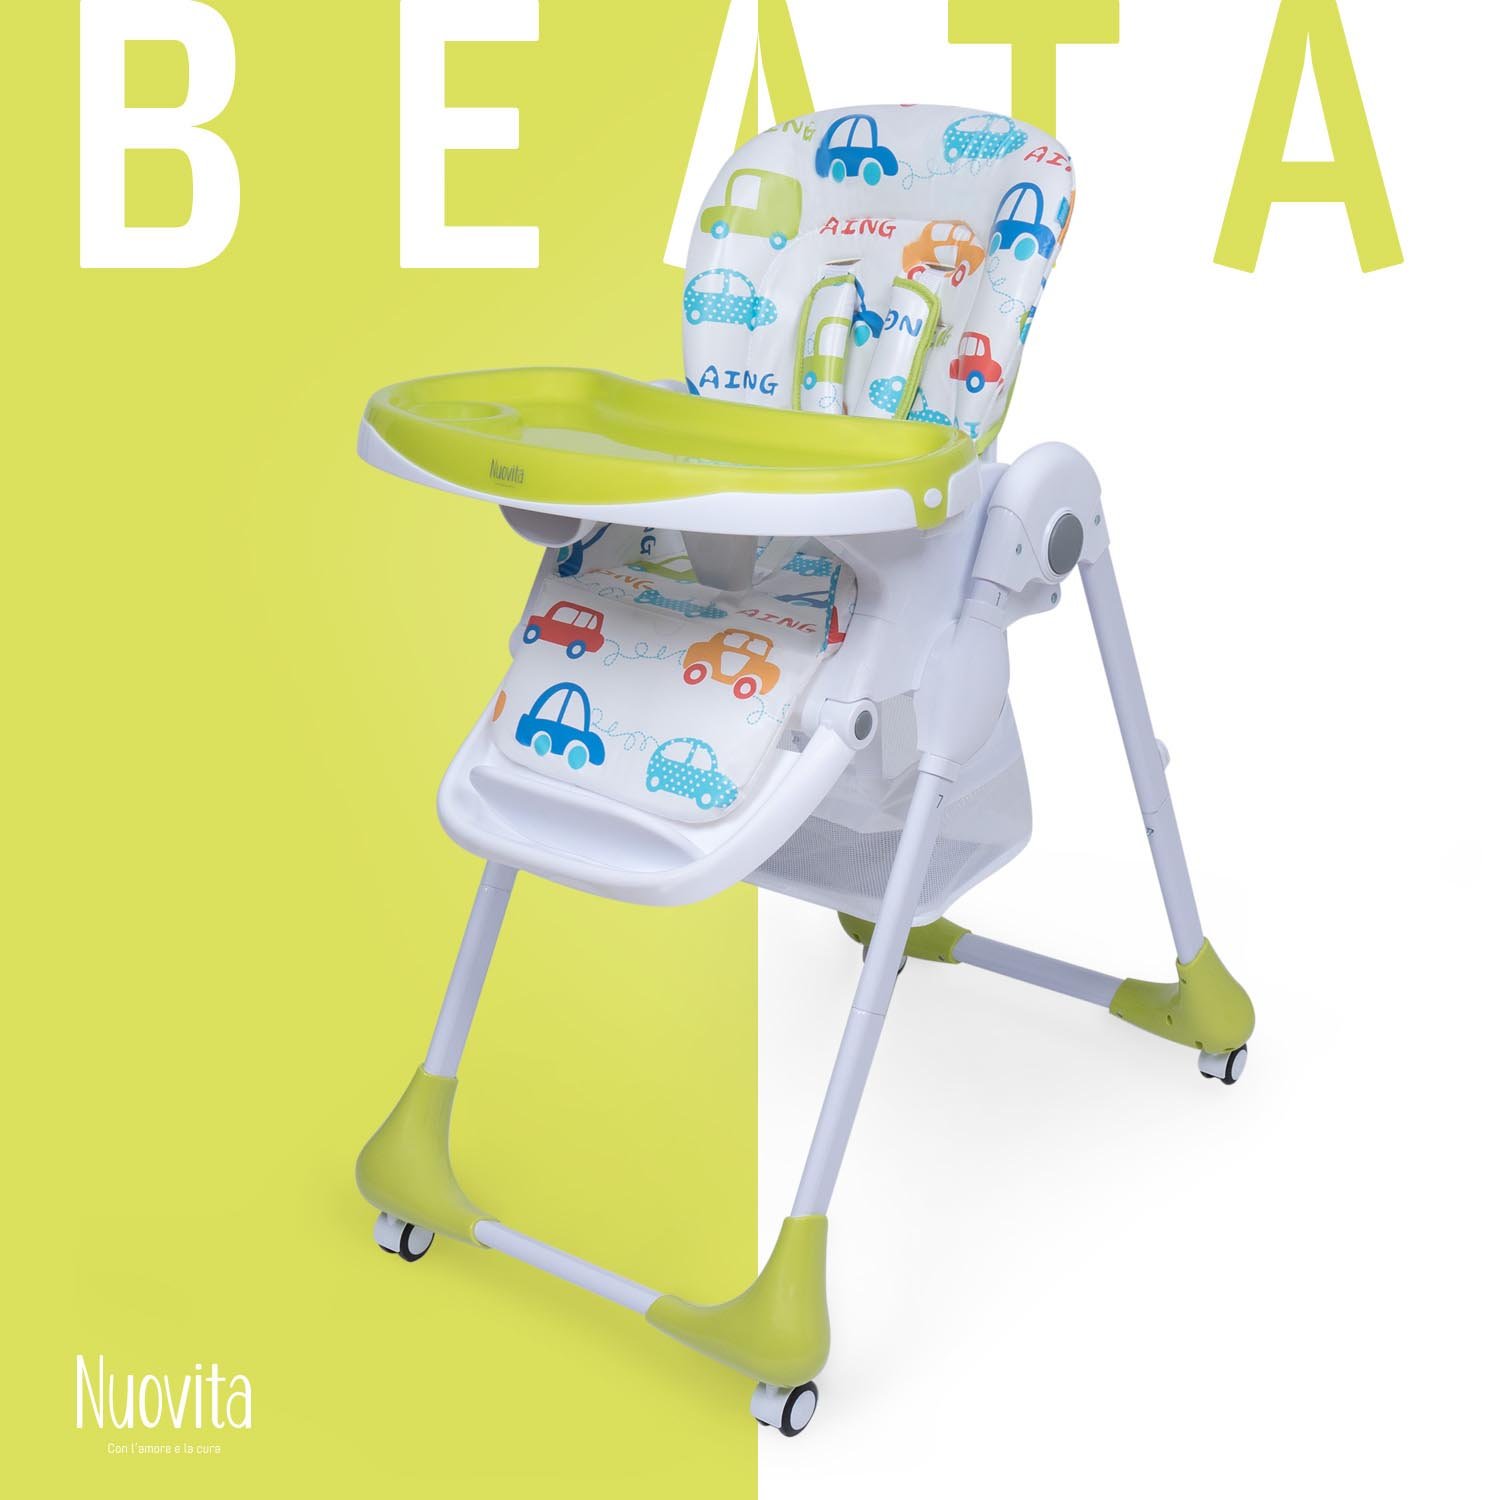 Стульчик для кормления Nuovita Beata (Viaggio / Путешествие) стульчик для кормления nuovita beata